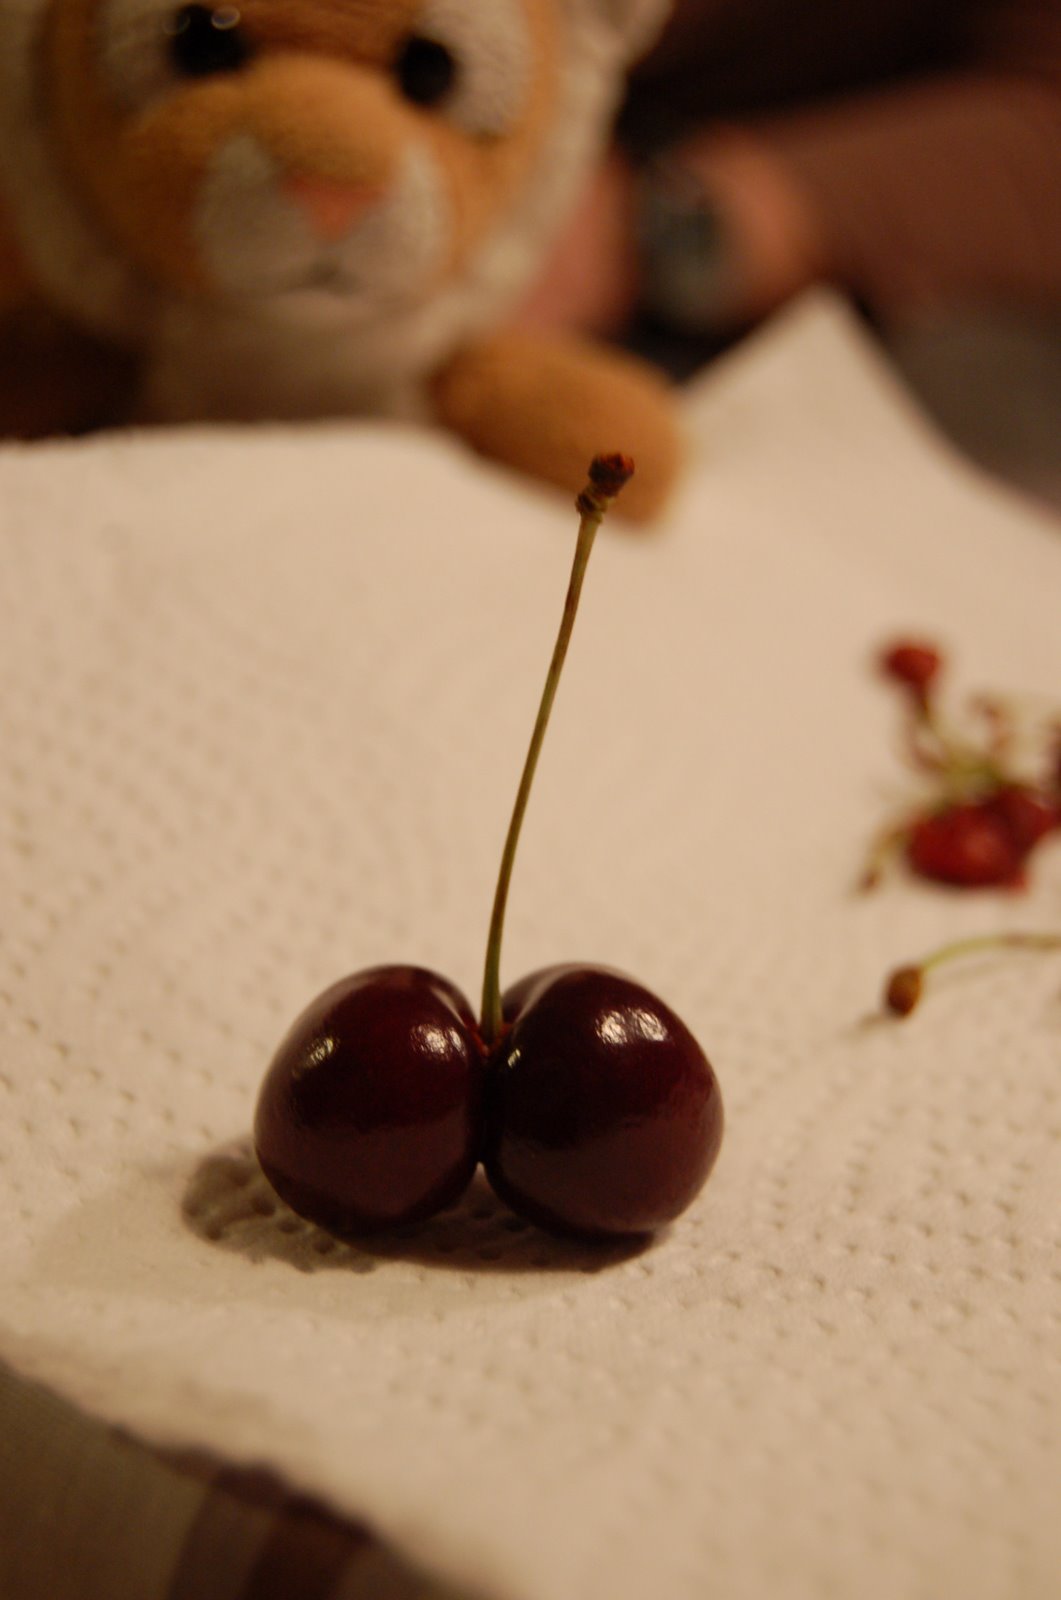 [Knut+&+cherry.JPG]